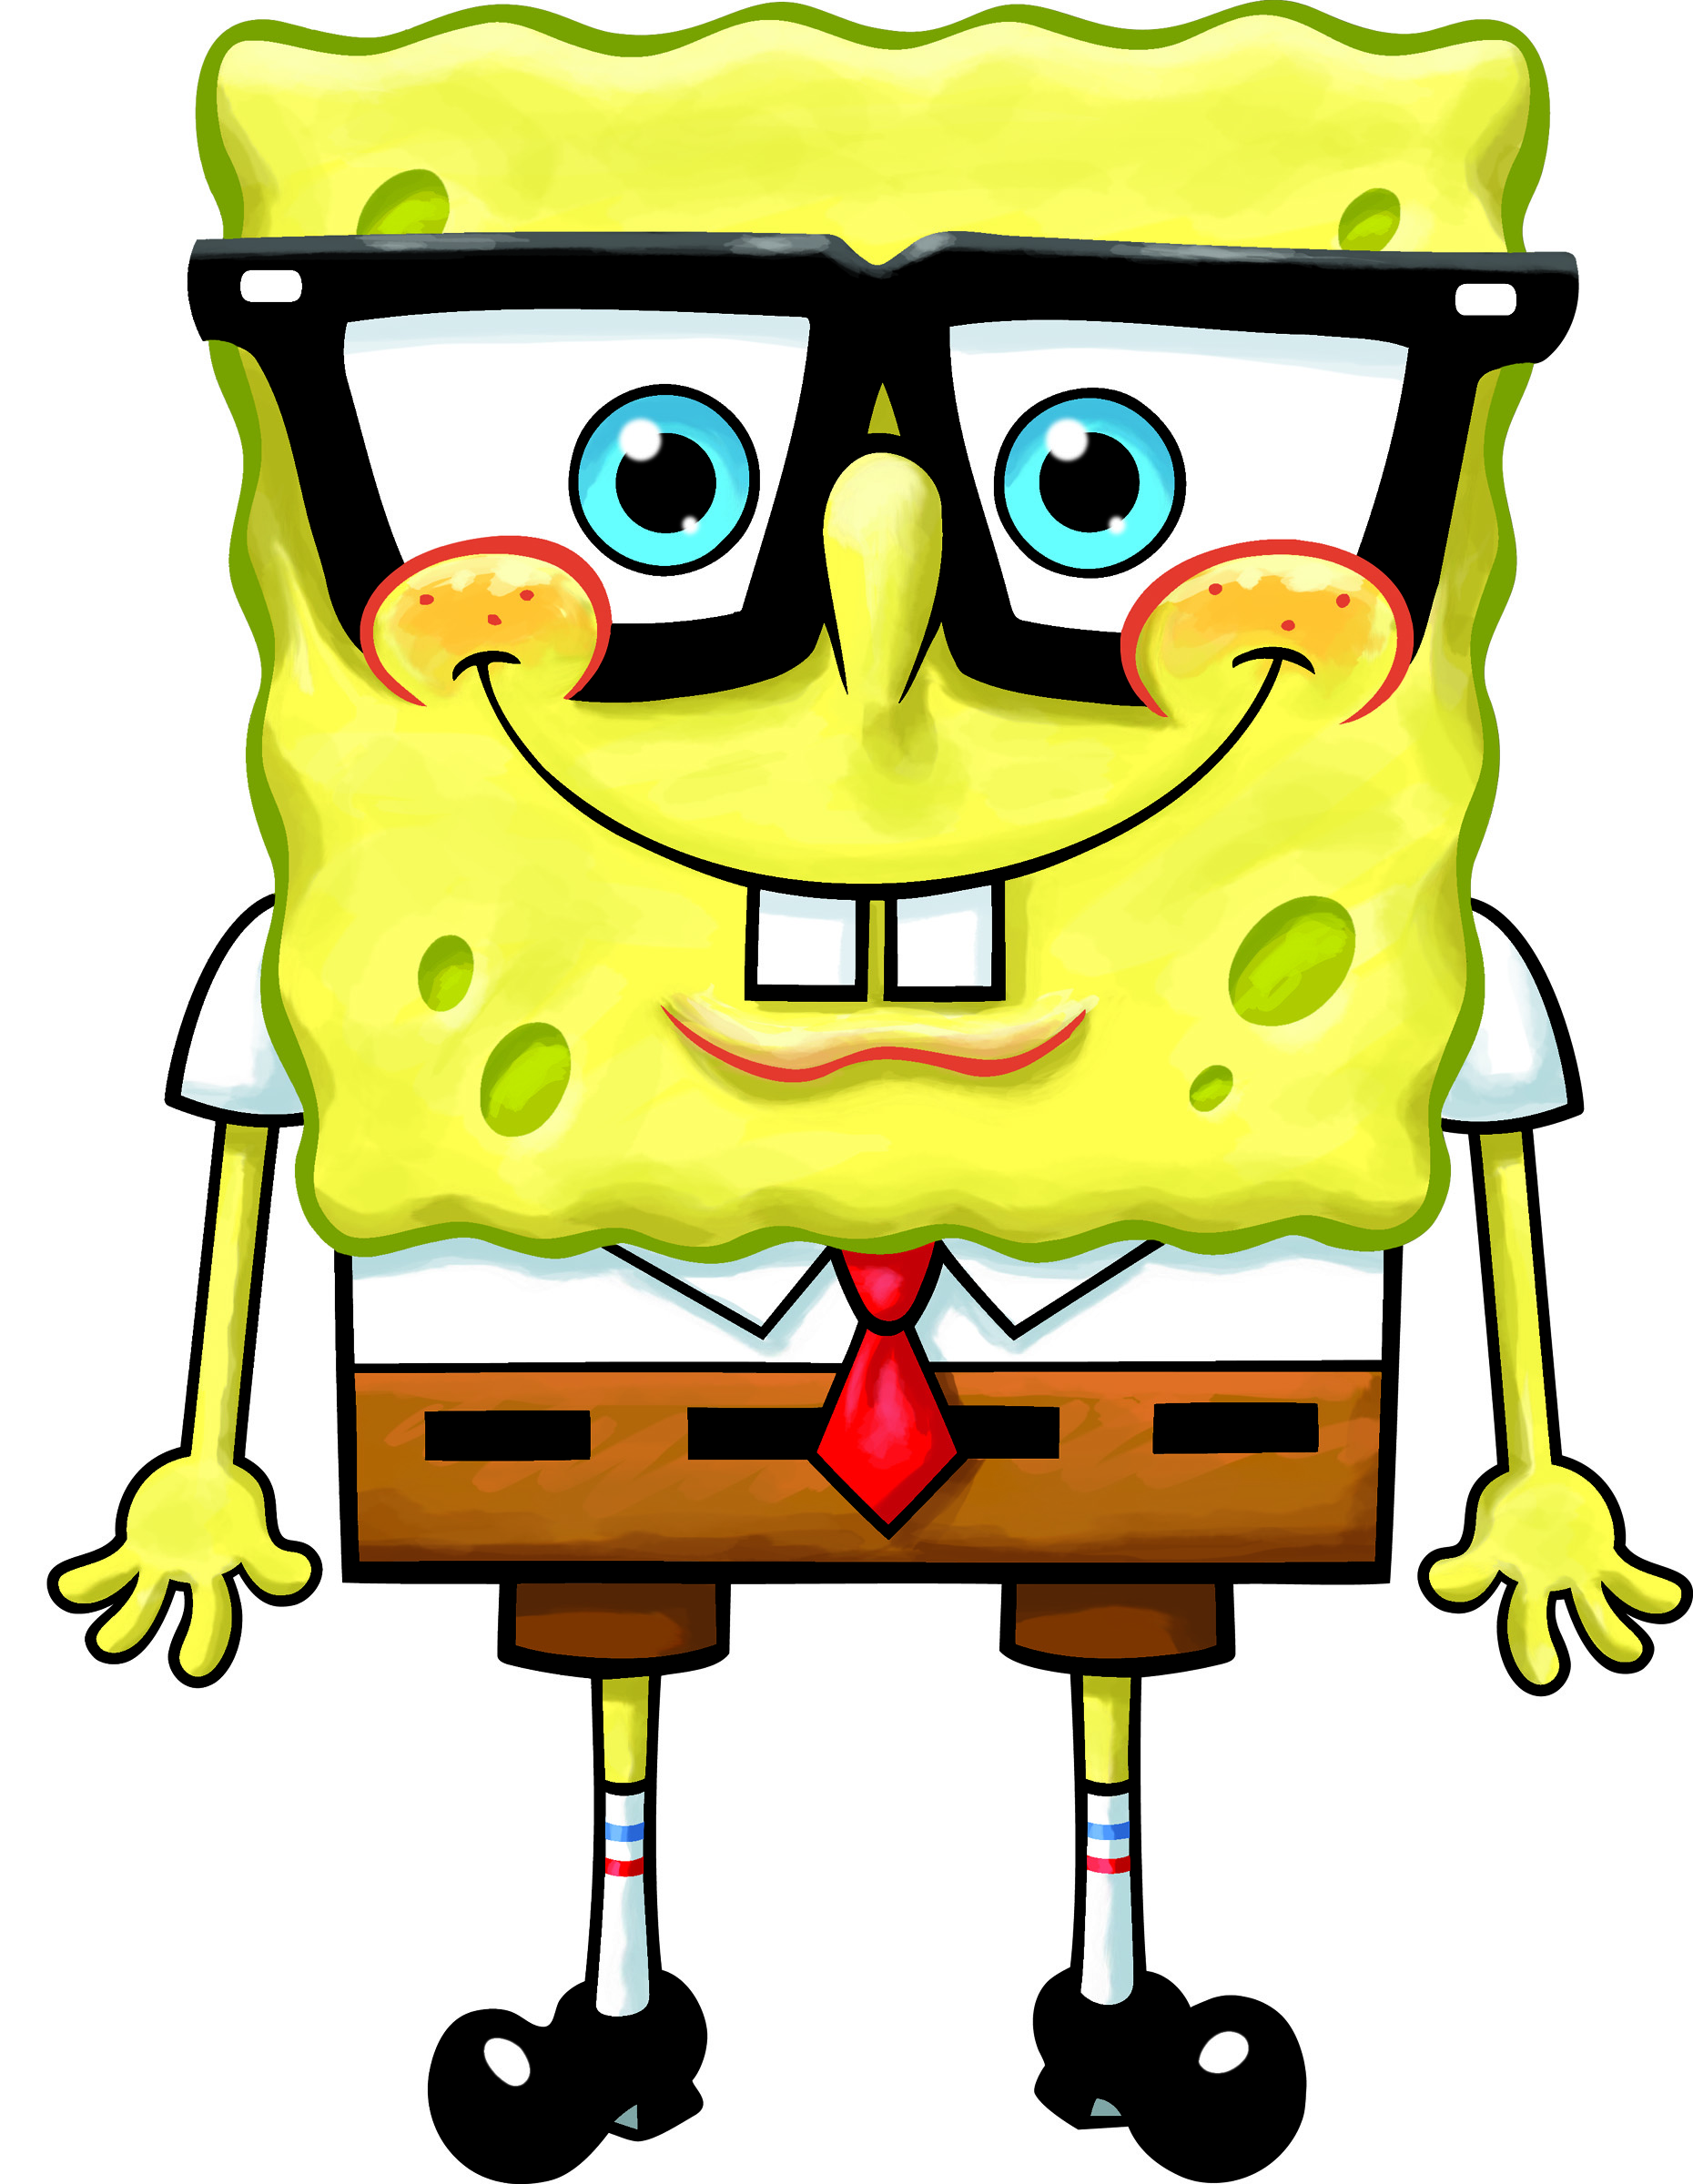 SpongeBob SquarePants - THE ADVENTURES OF GARY THE SNAIL Wiki